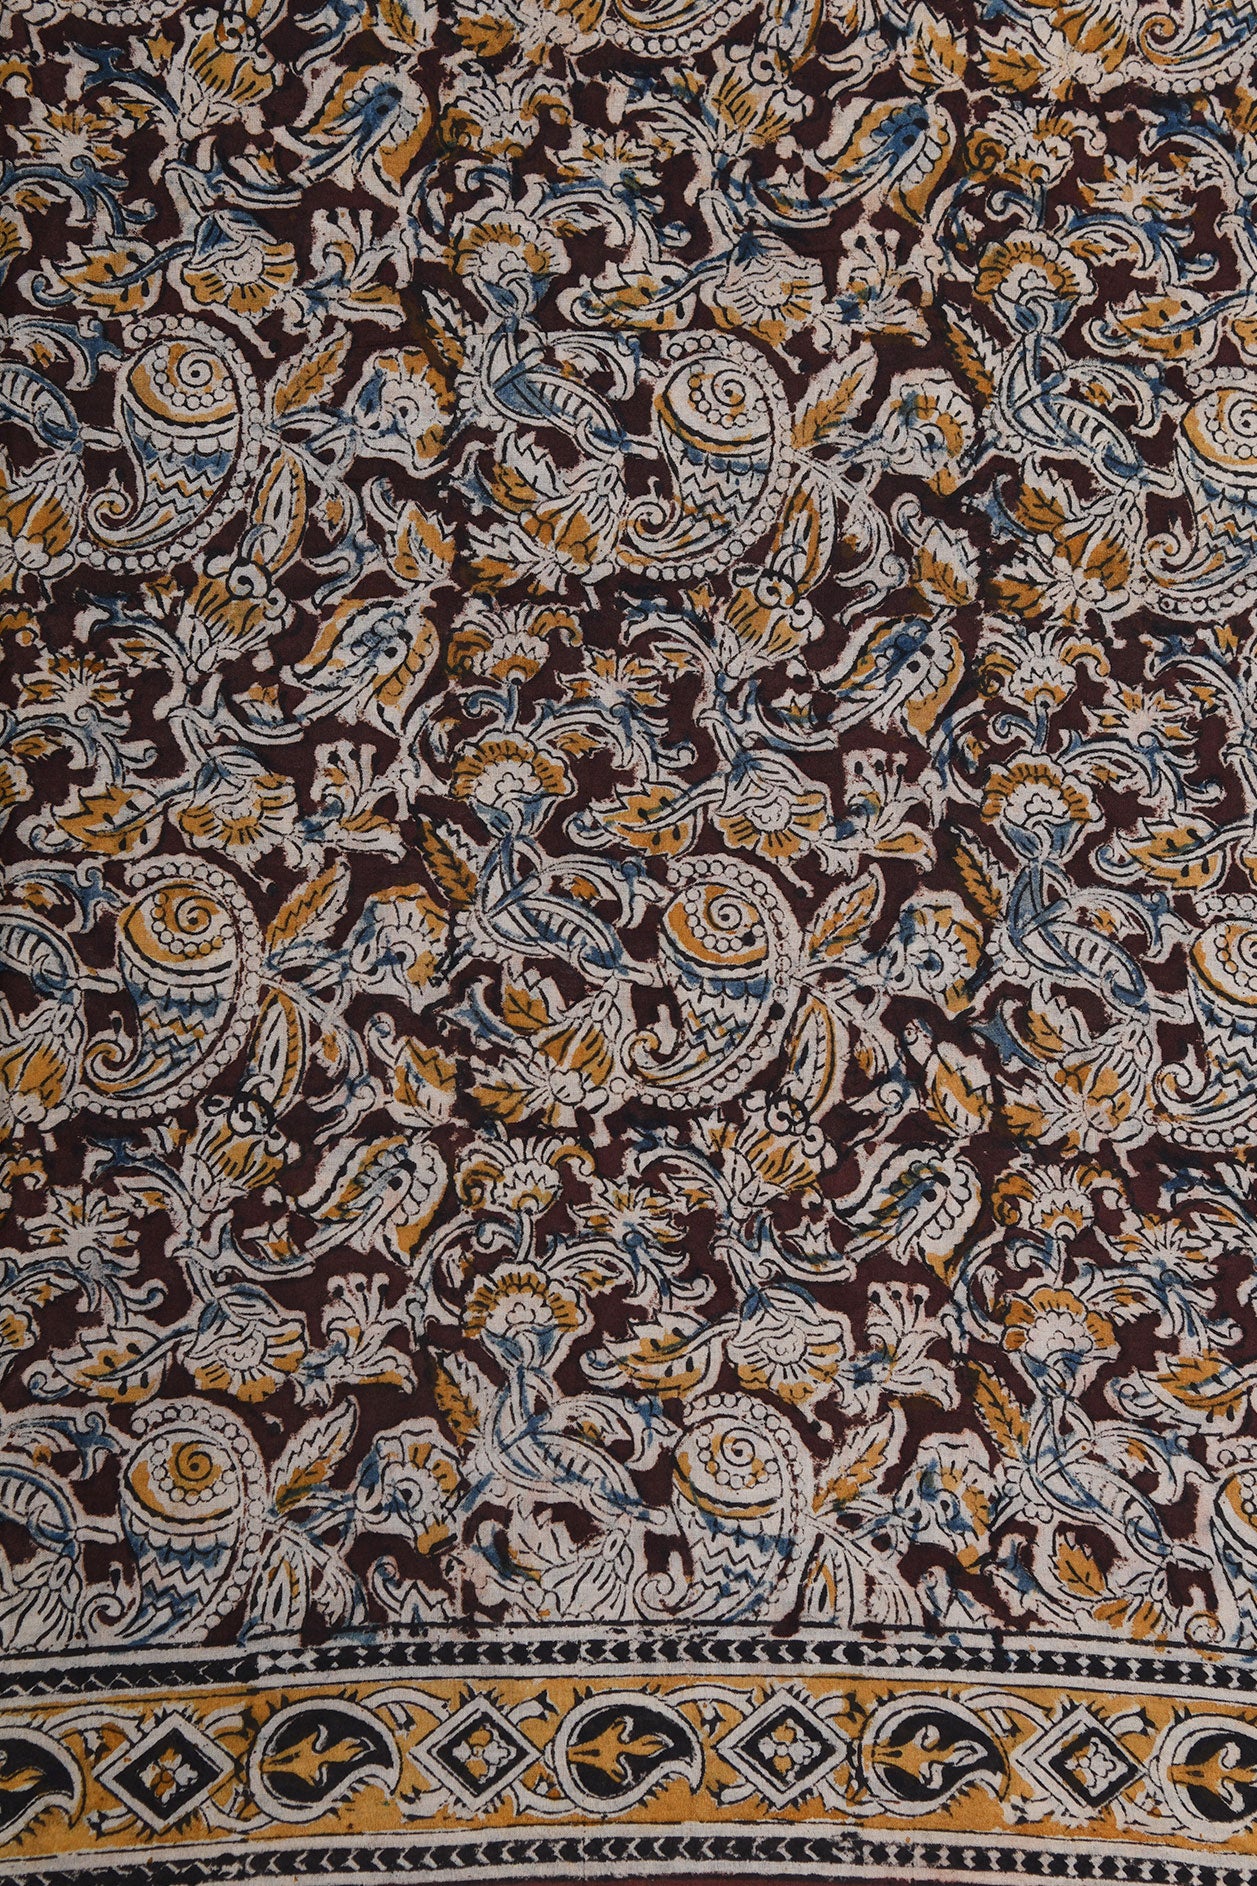 Paisley Border With Floral Design Chocolate Brown Kalamkari Printed Cotton Saree